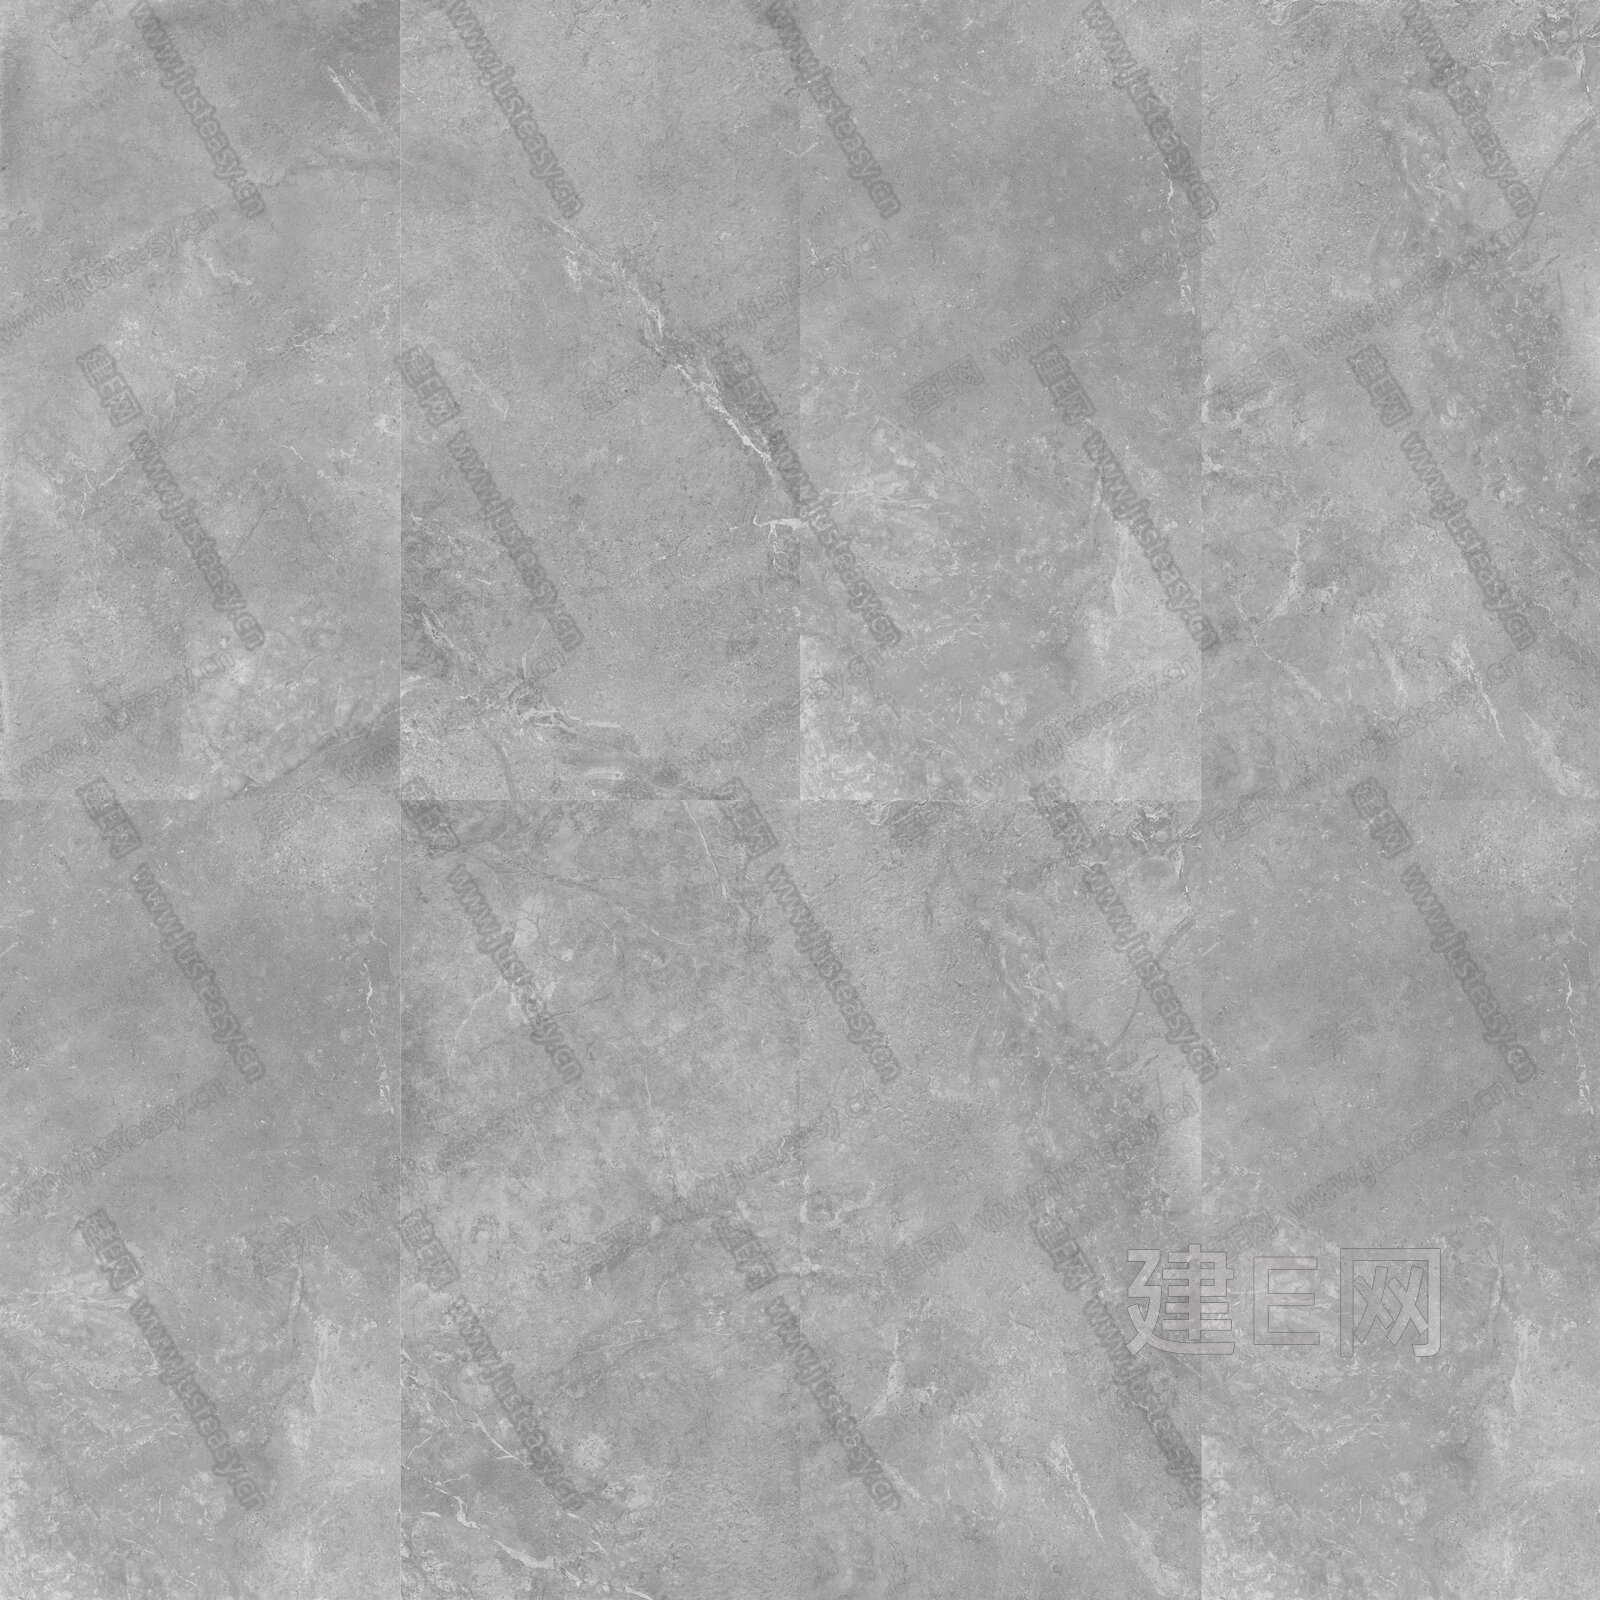 KITO金意陶瓷砖-糖果釉系列-因特拉肯 1500*750MM 900*900MM 客厅餐厅墙砖地砖